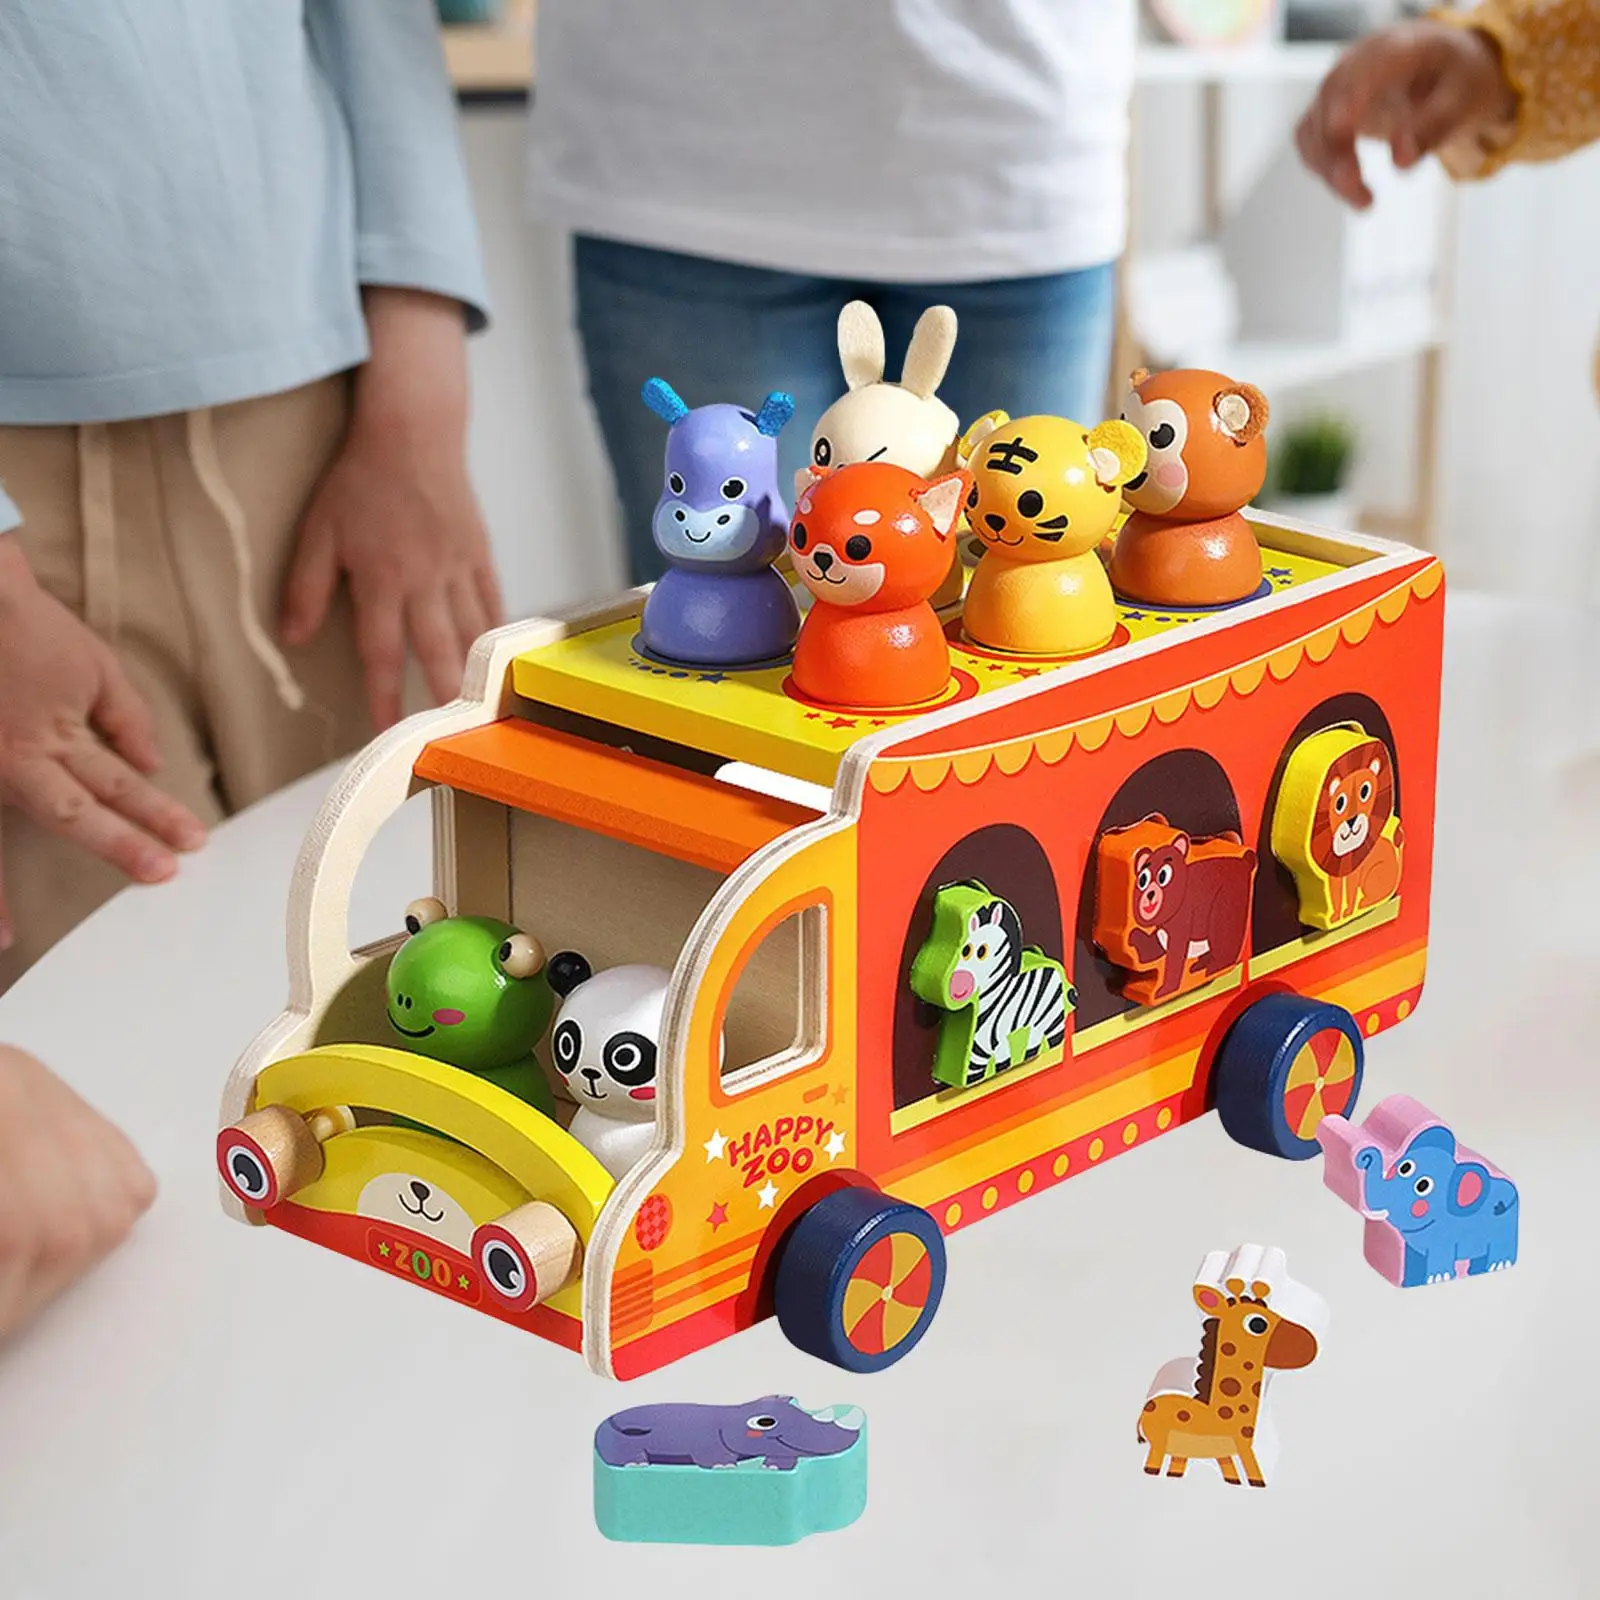 

Animal Shape Sorting Truck Toy Multipurpose Sensory Wood Shape Sorter Toy for Memory Independence Fine Motor Focus Imagination